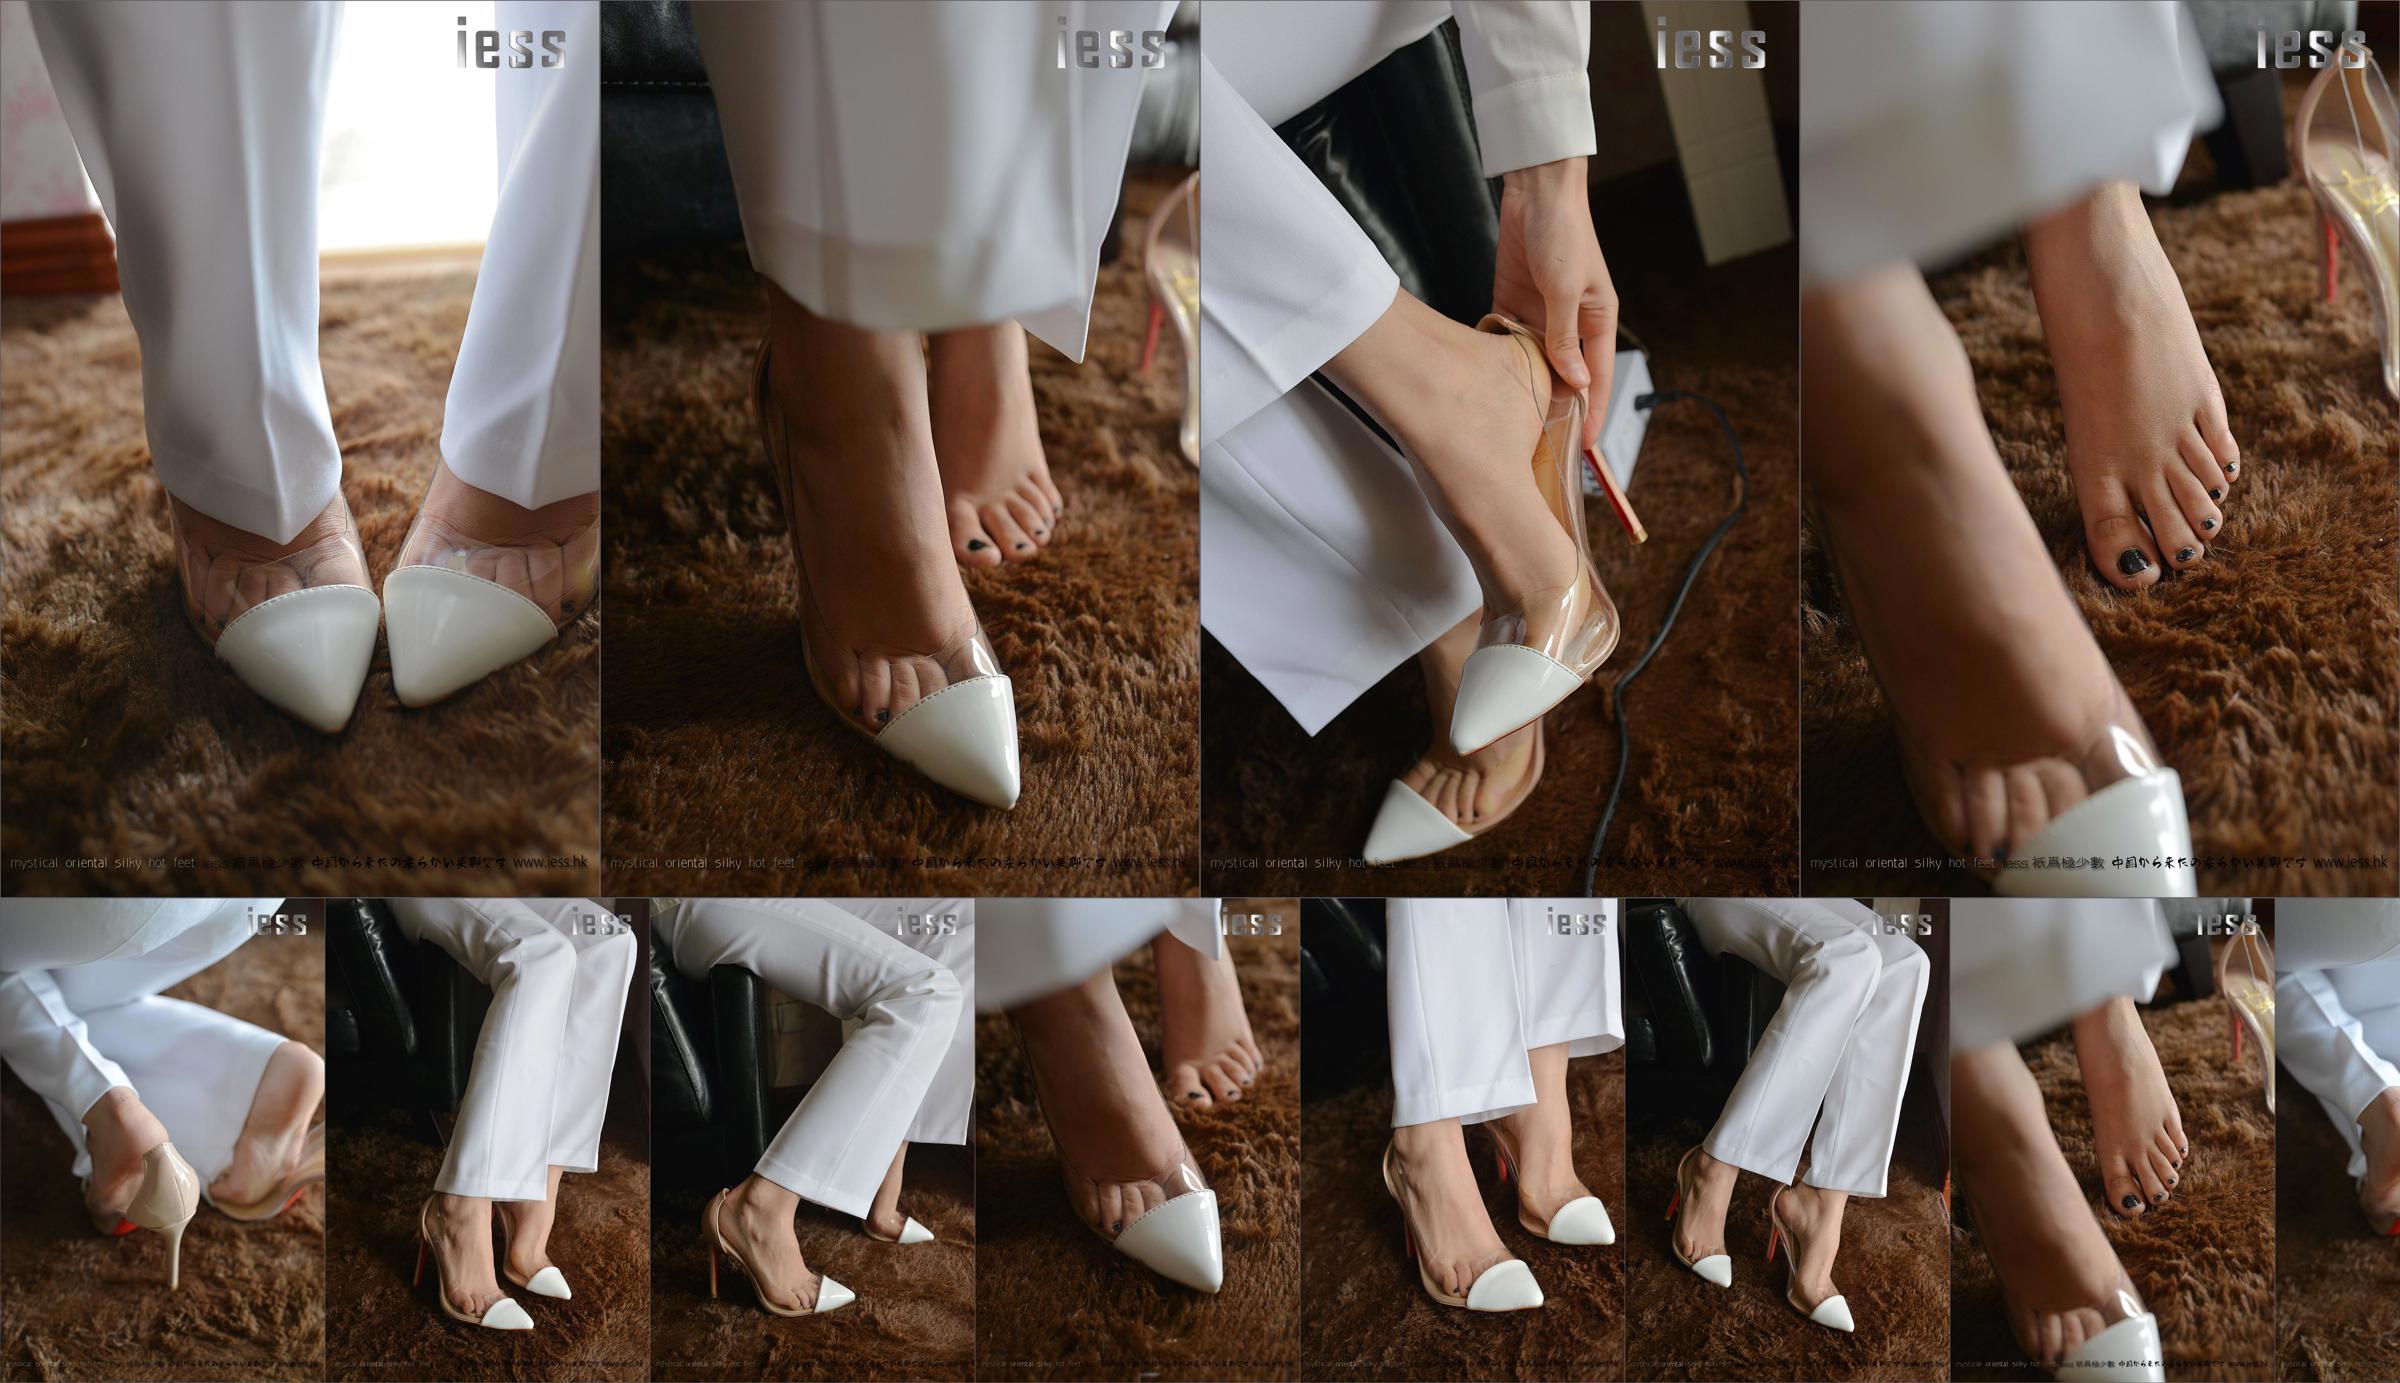 Silky Foot Bento 058 Suspense "Коллекция - высокие каблуки босиком" [IESS Wei Si Fun Xiang] No.e922c5 Страница 1